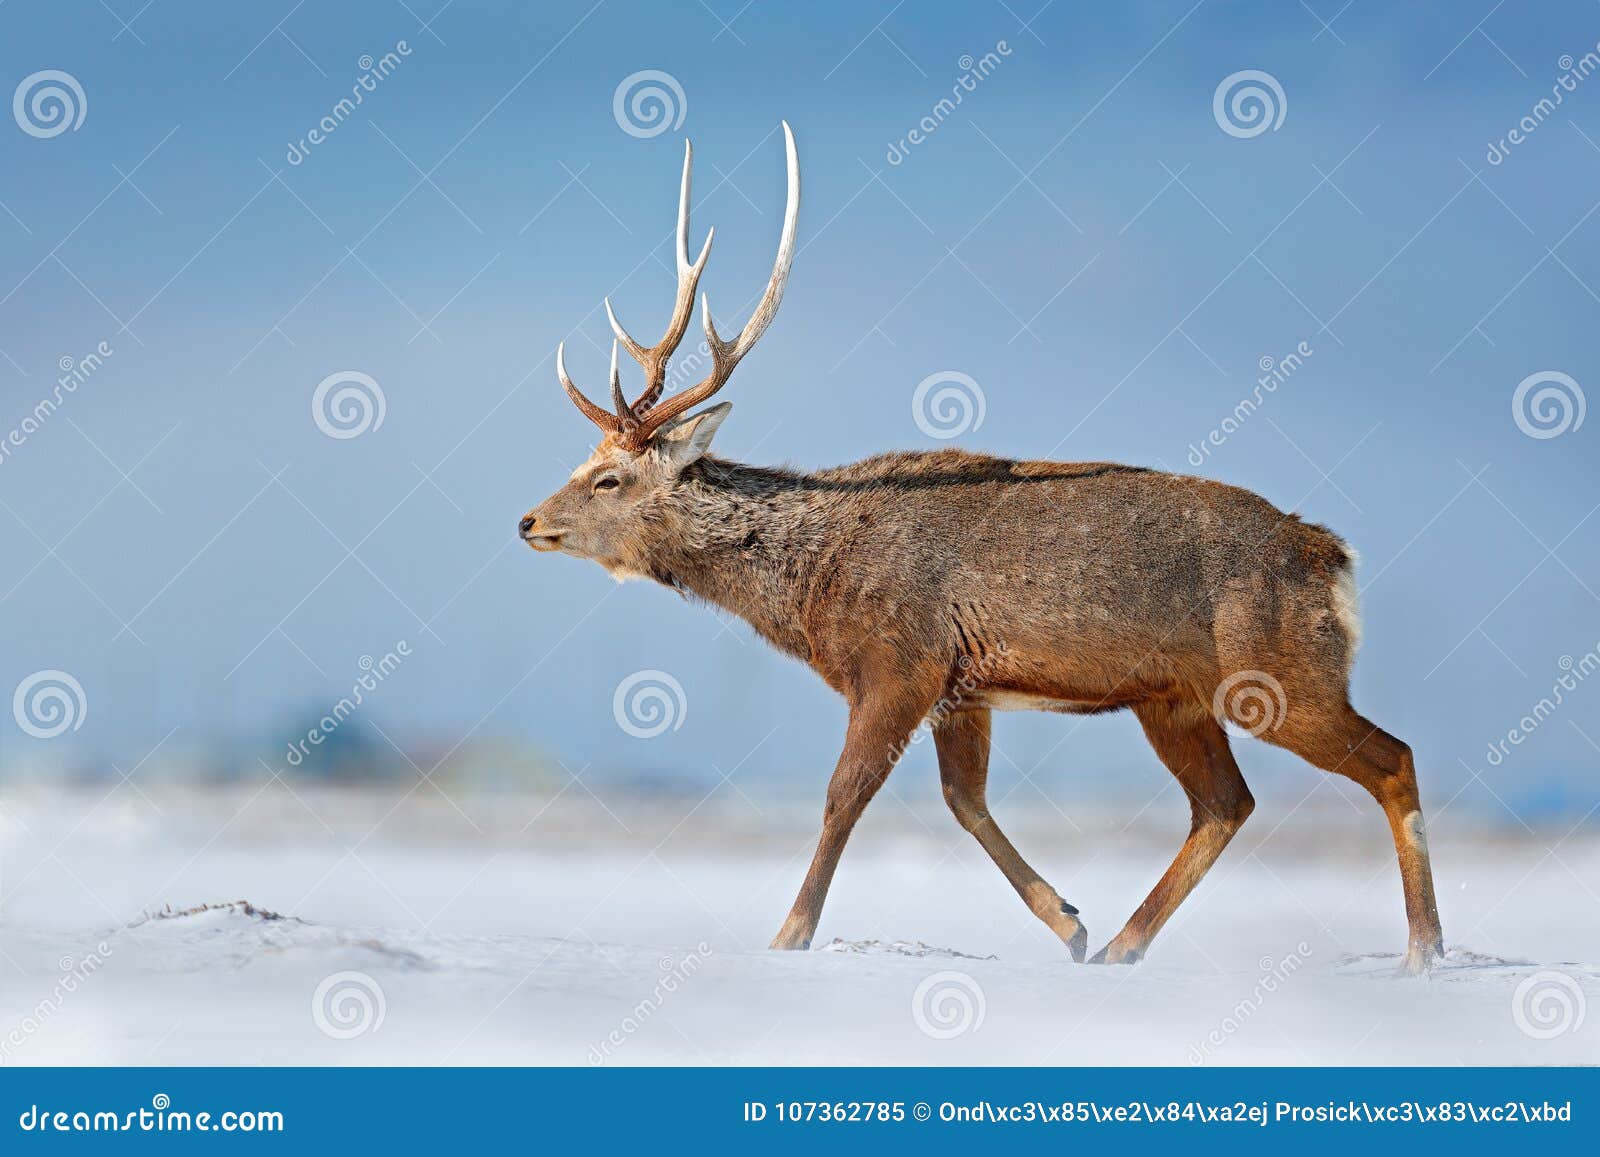 animal with antler in the nature habitat, winter scene, hokkaido, wildlife nature, japan. hokkaido sika deer, cervus nippon yesoen